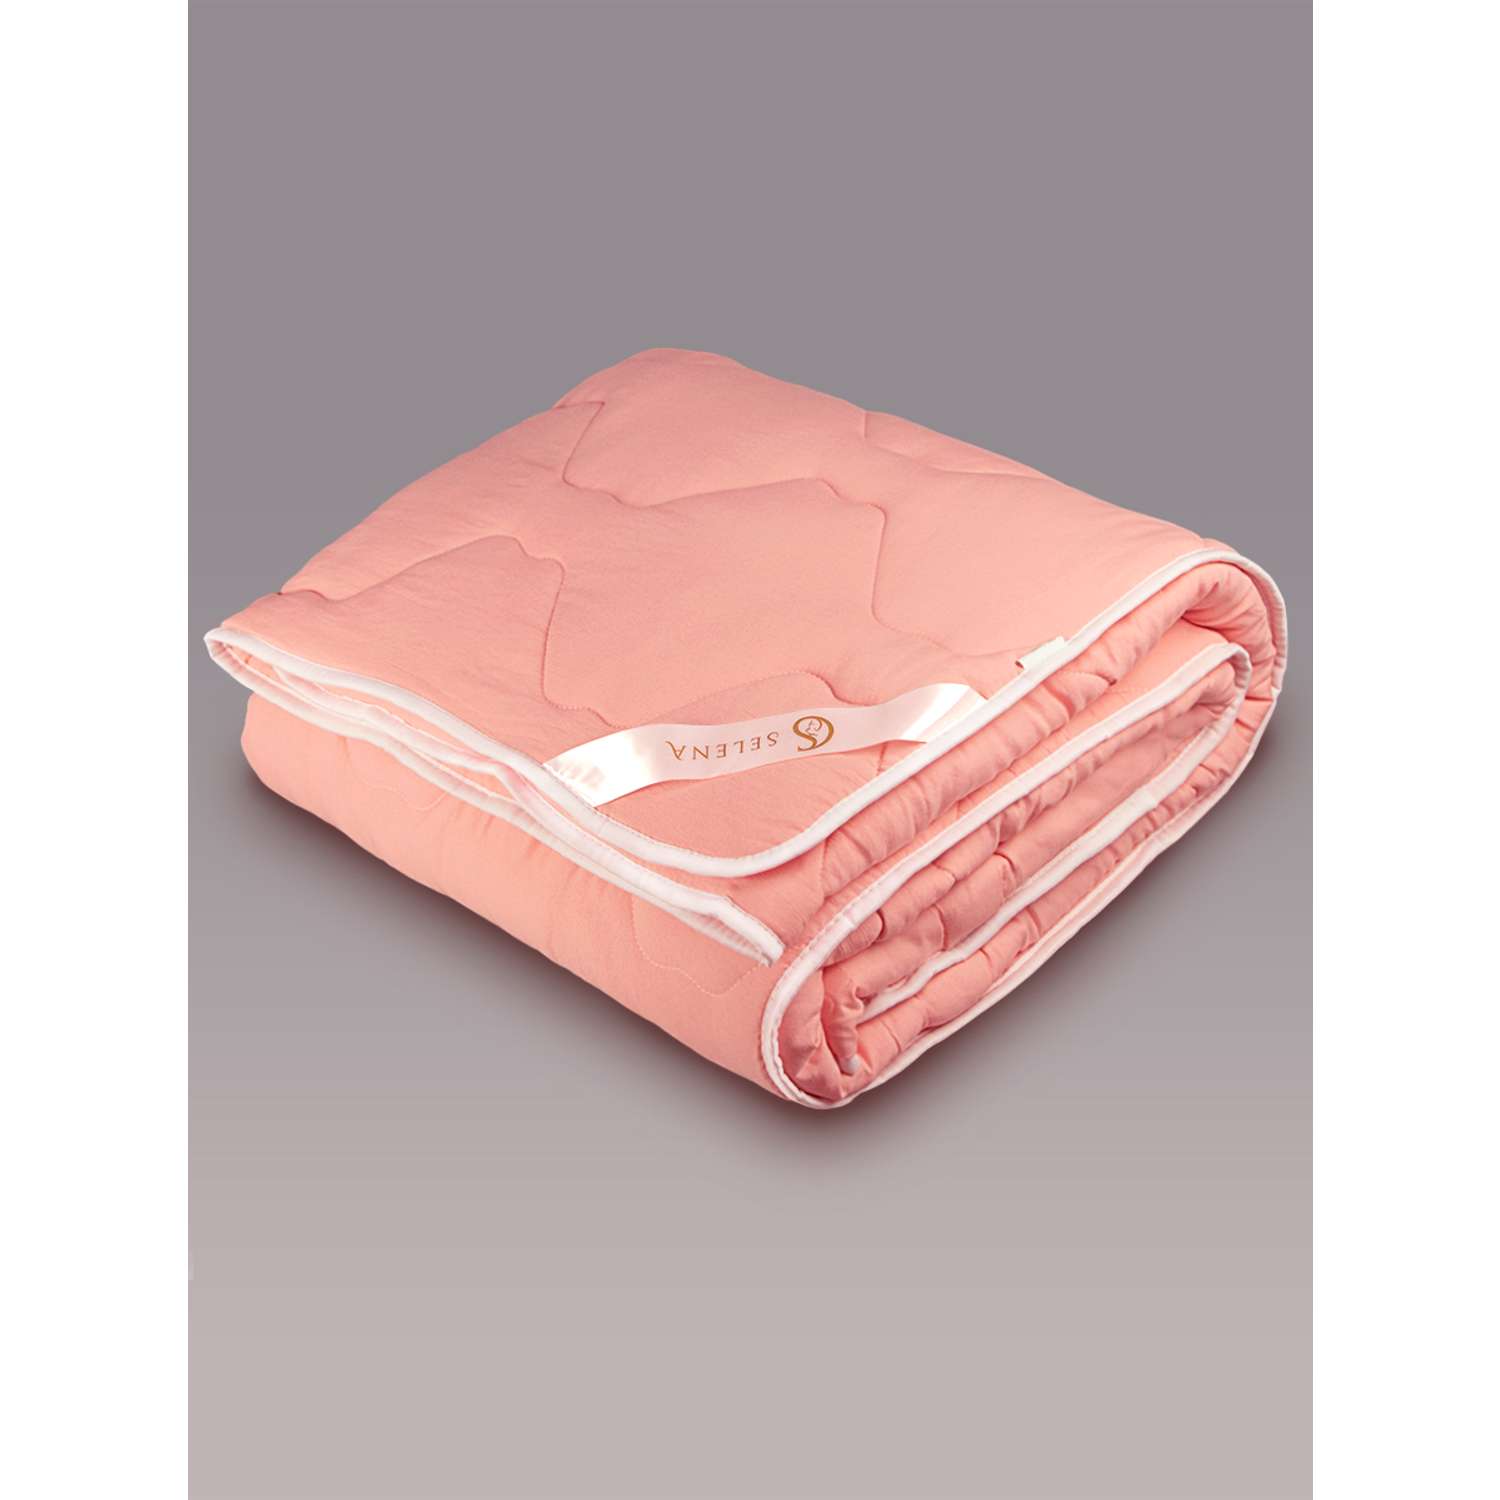 Одеяло SELENA Crinkle line 140х205 см розовое наполнитель Лебяжий пух - фото 1